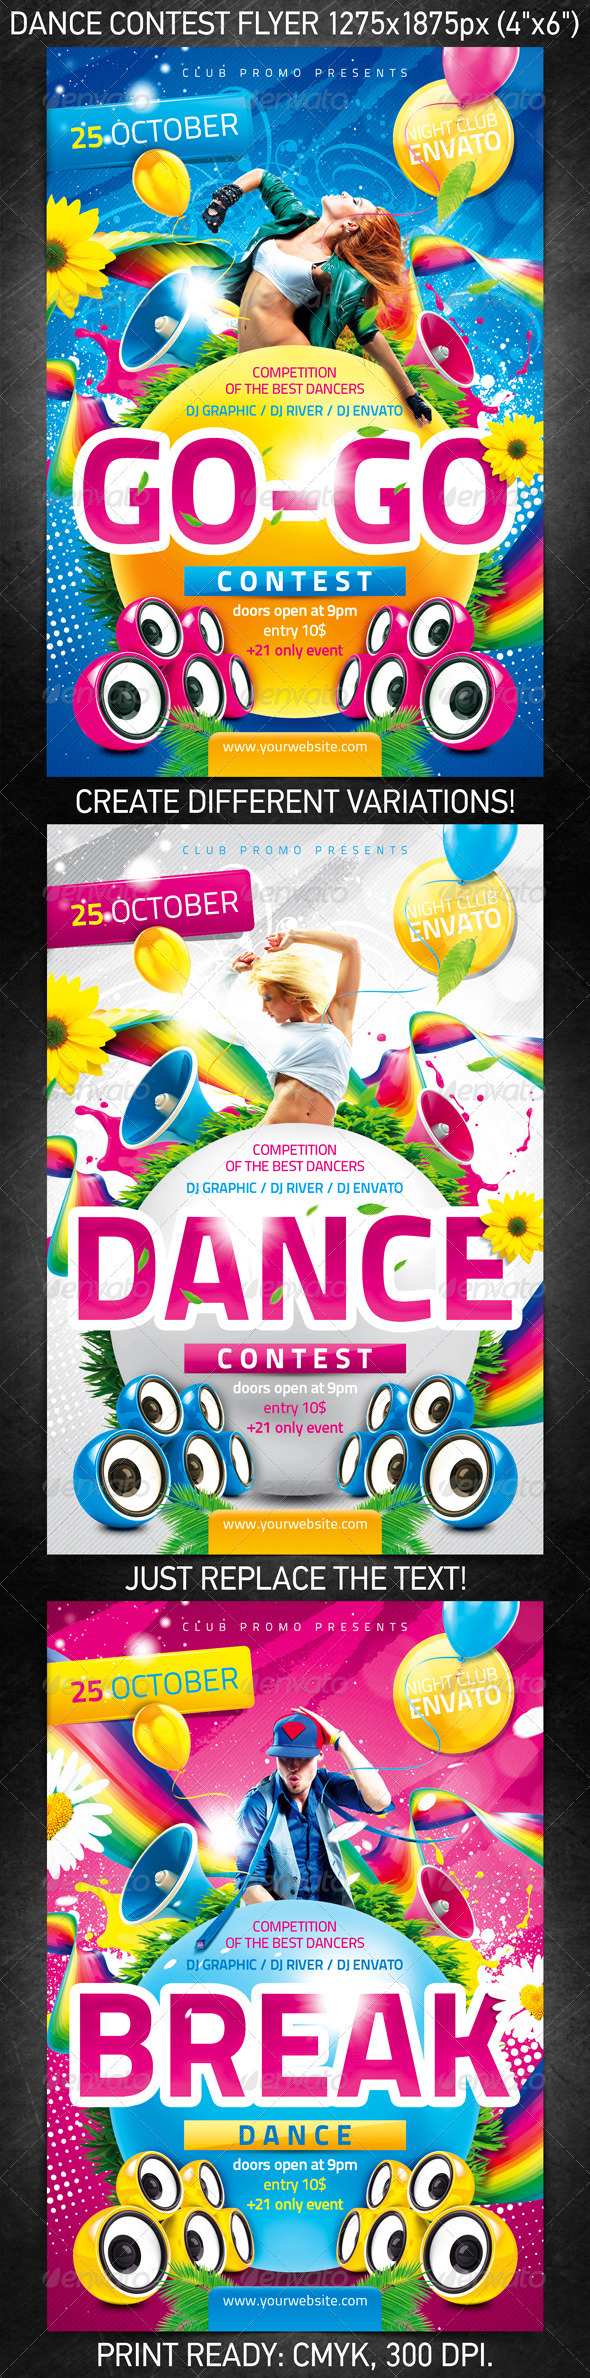 Dance Contest Flyer